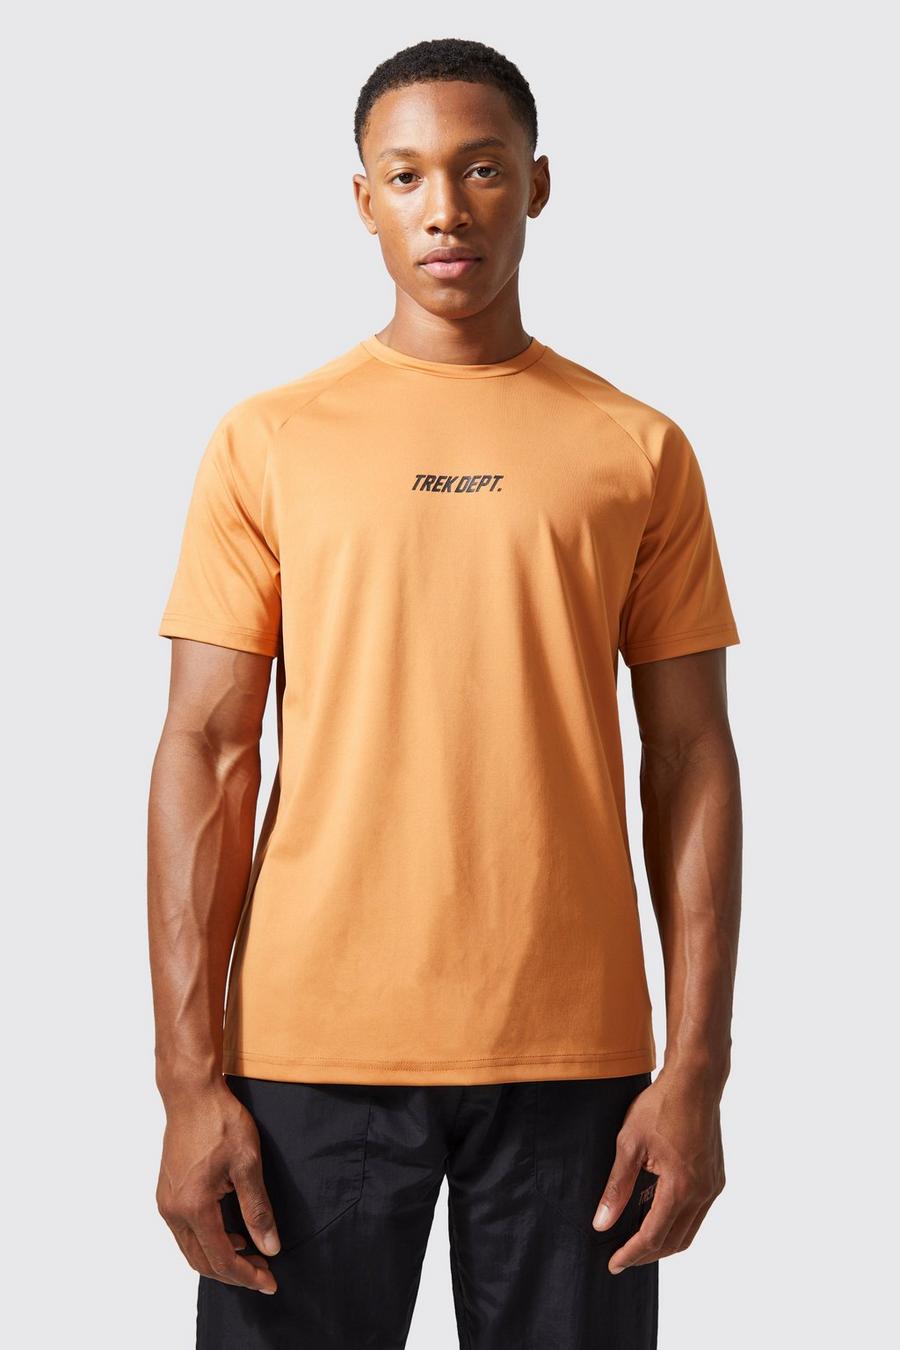 Camiseta Active resistente de Trek, Burnt orange image number 1